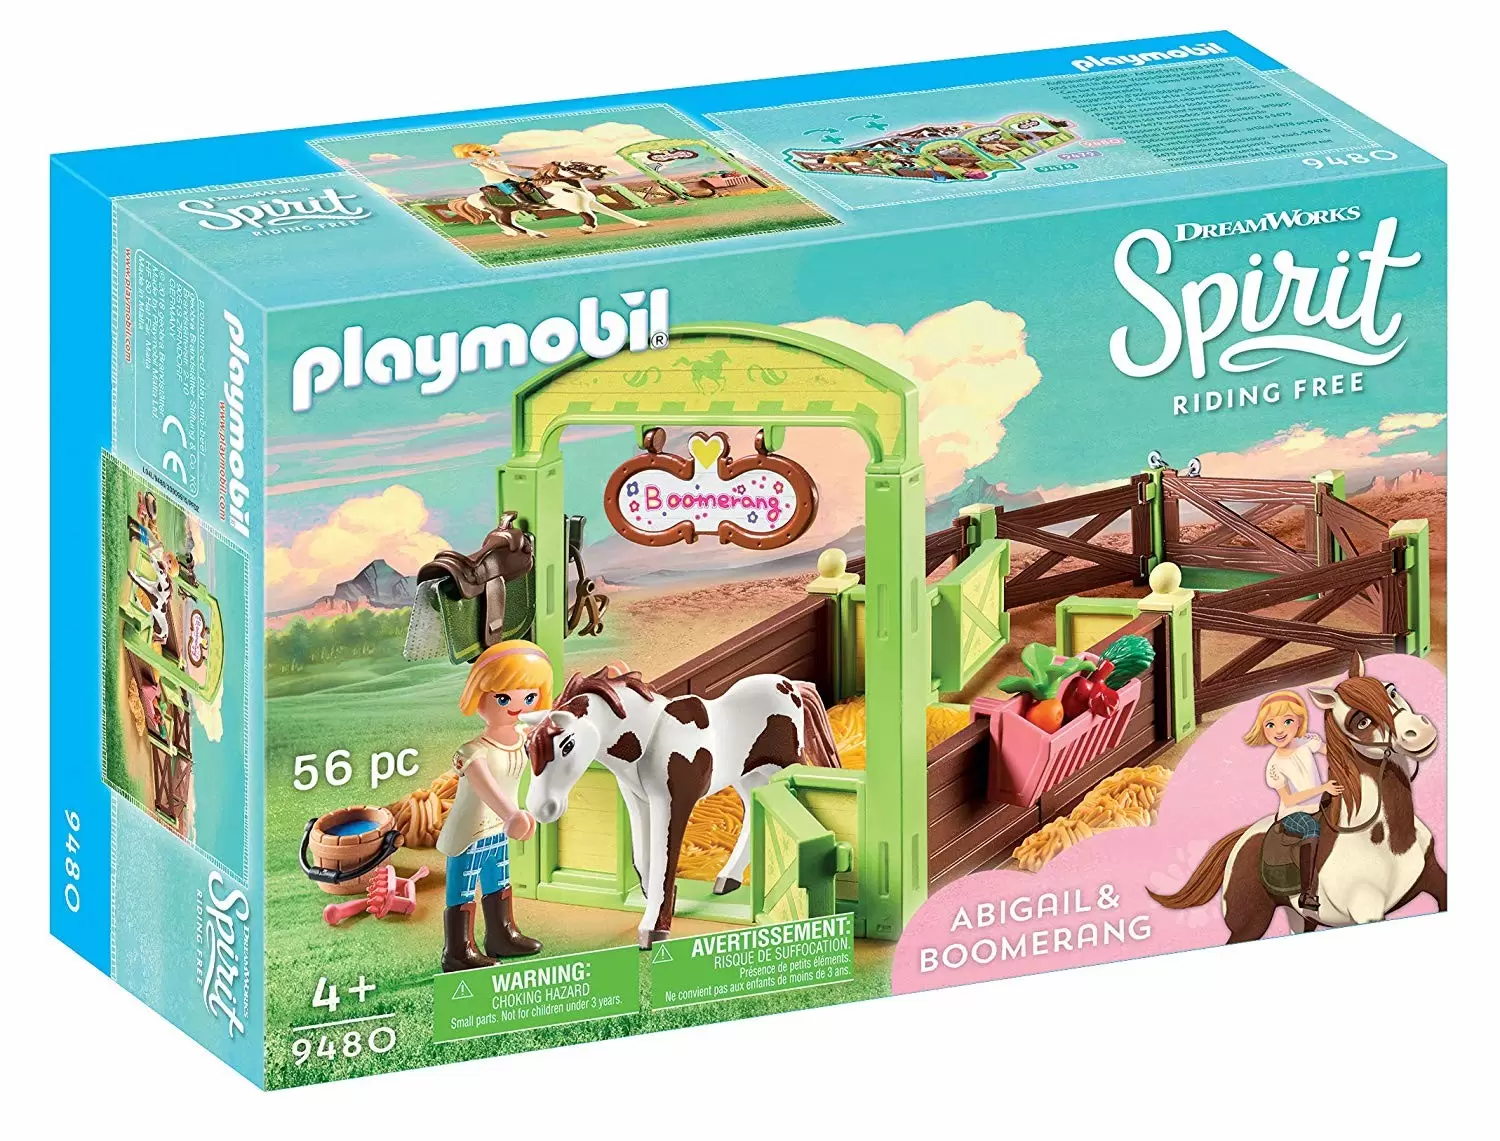 Playmobil DreamWorks Spirit Barn with Lucky, PRU & Abigail